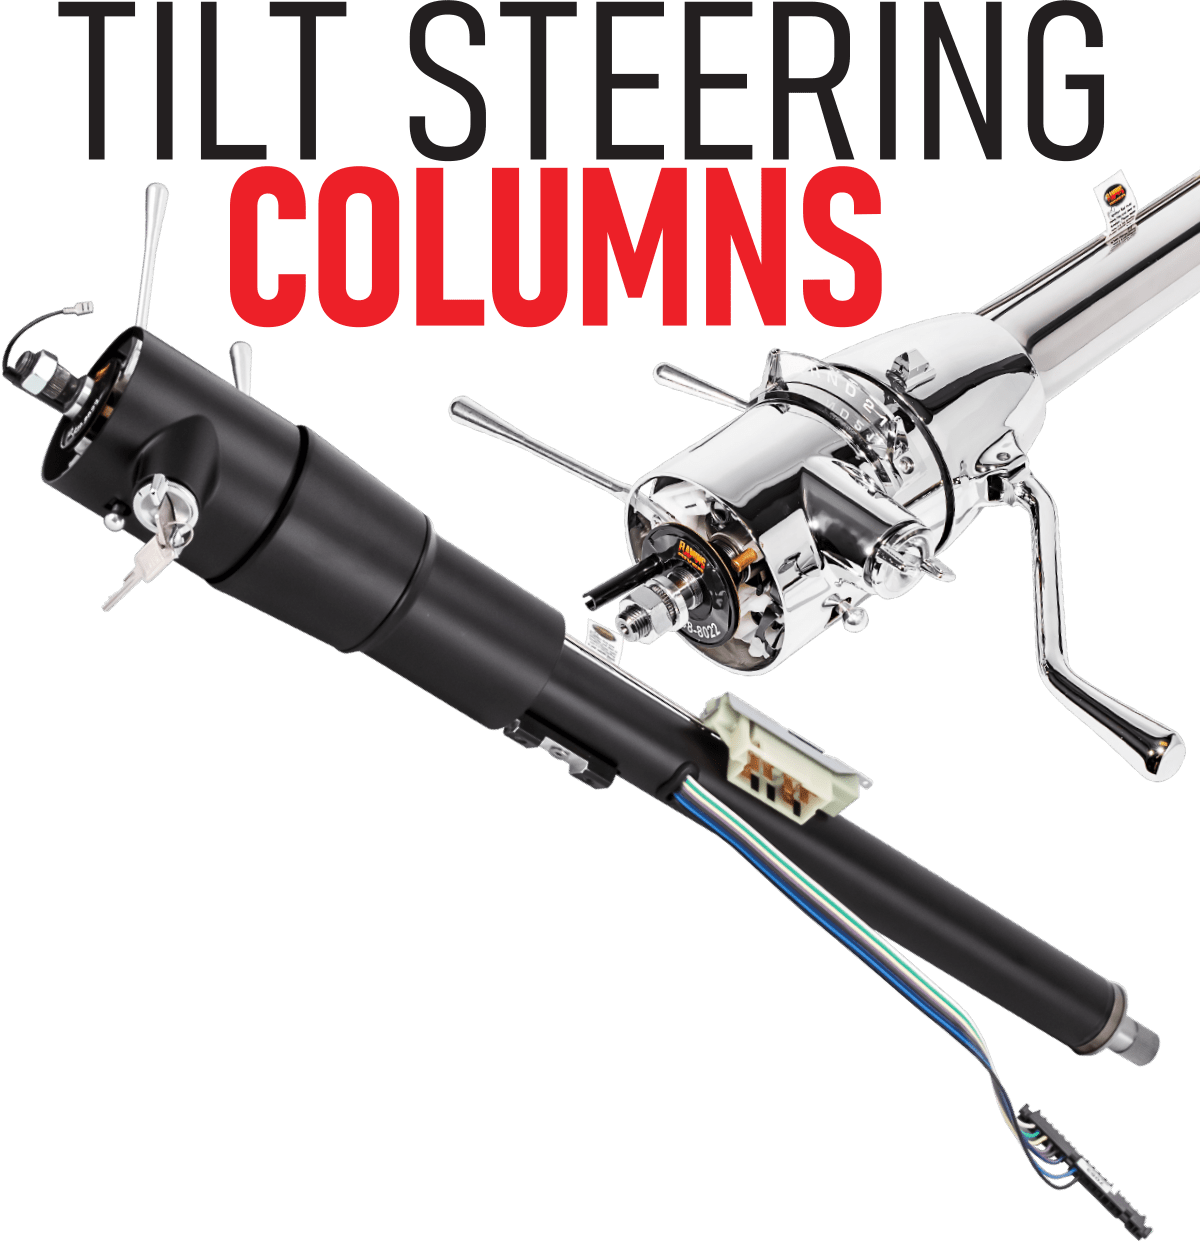 Tilt Steering Columns